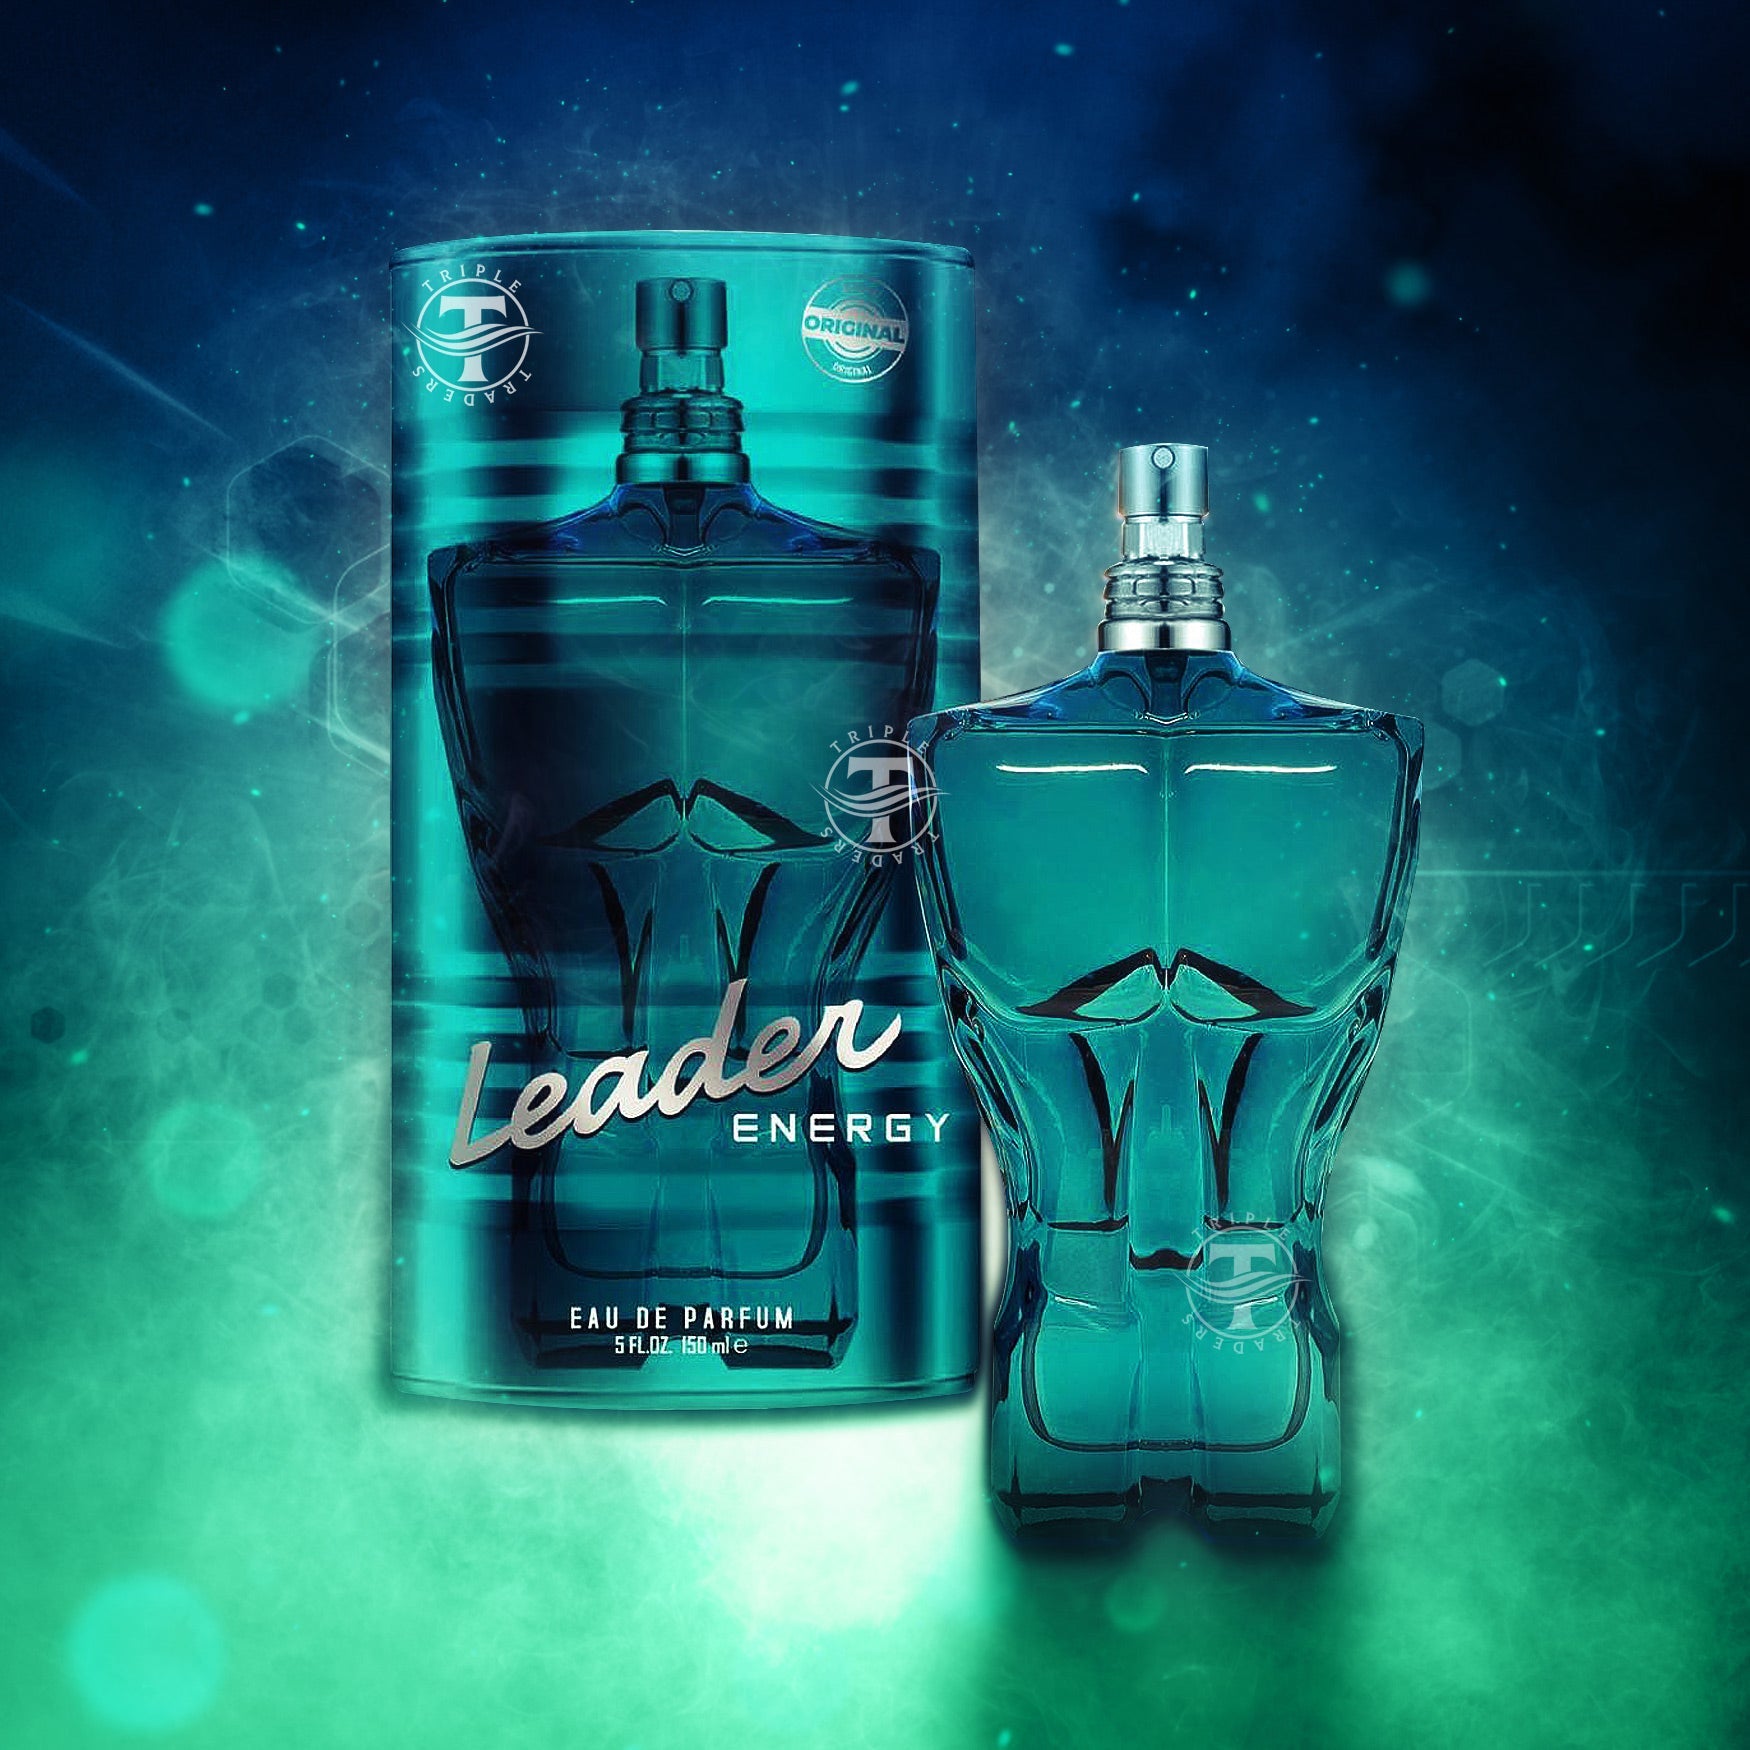 Leader Energy Eau De Parfum 5 FL OZ 150ML By Zoghbi Parfums